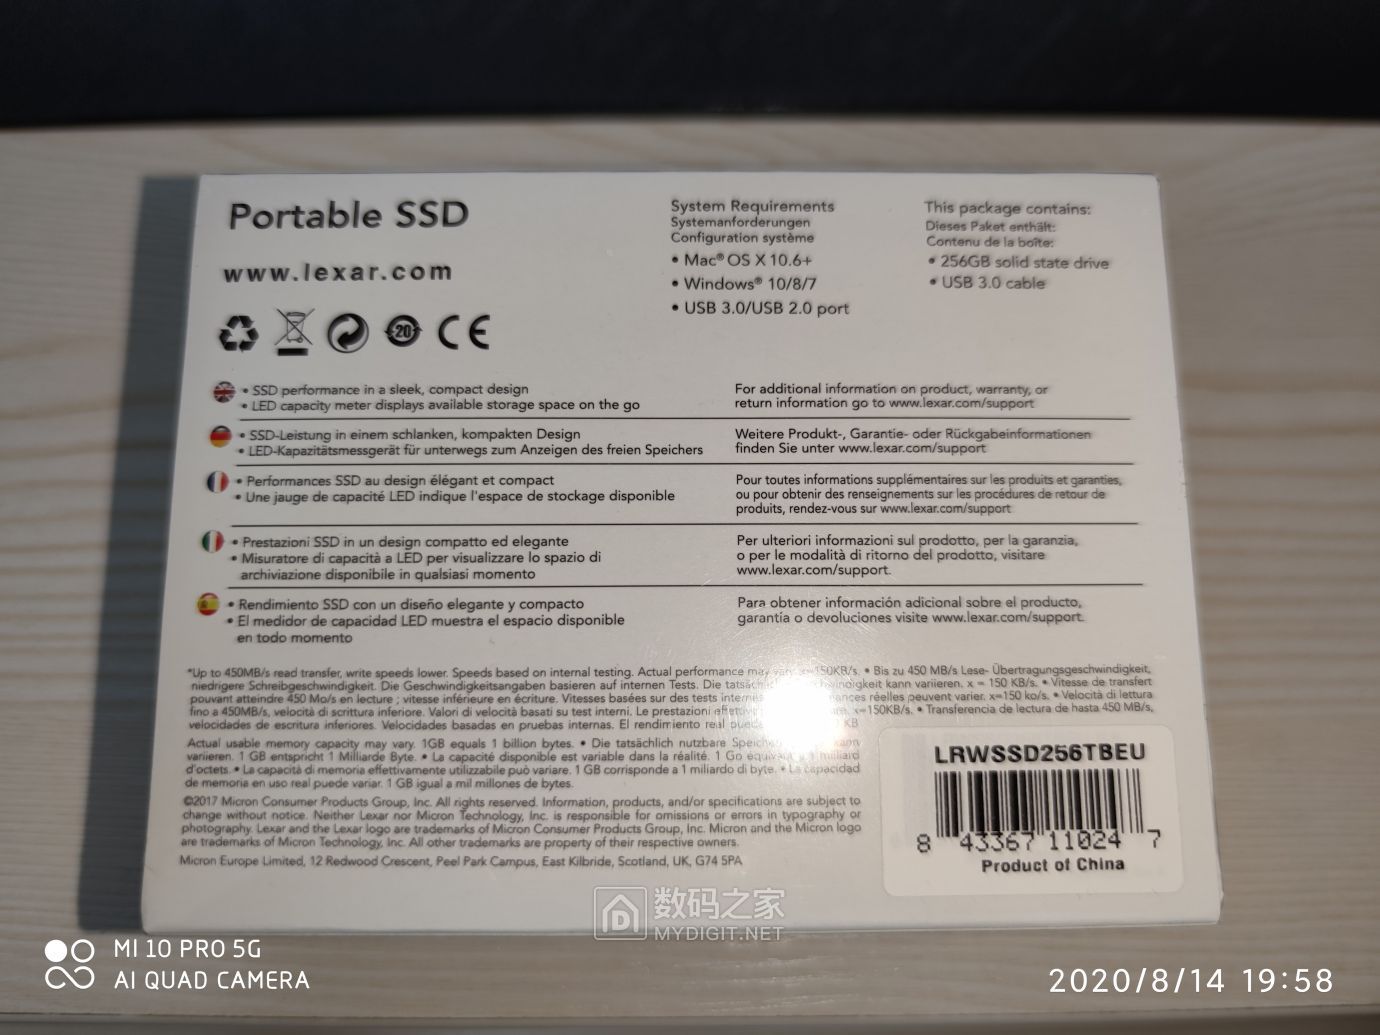 Portable SSD 256GB包装背面